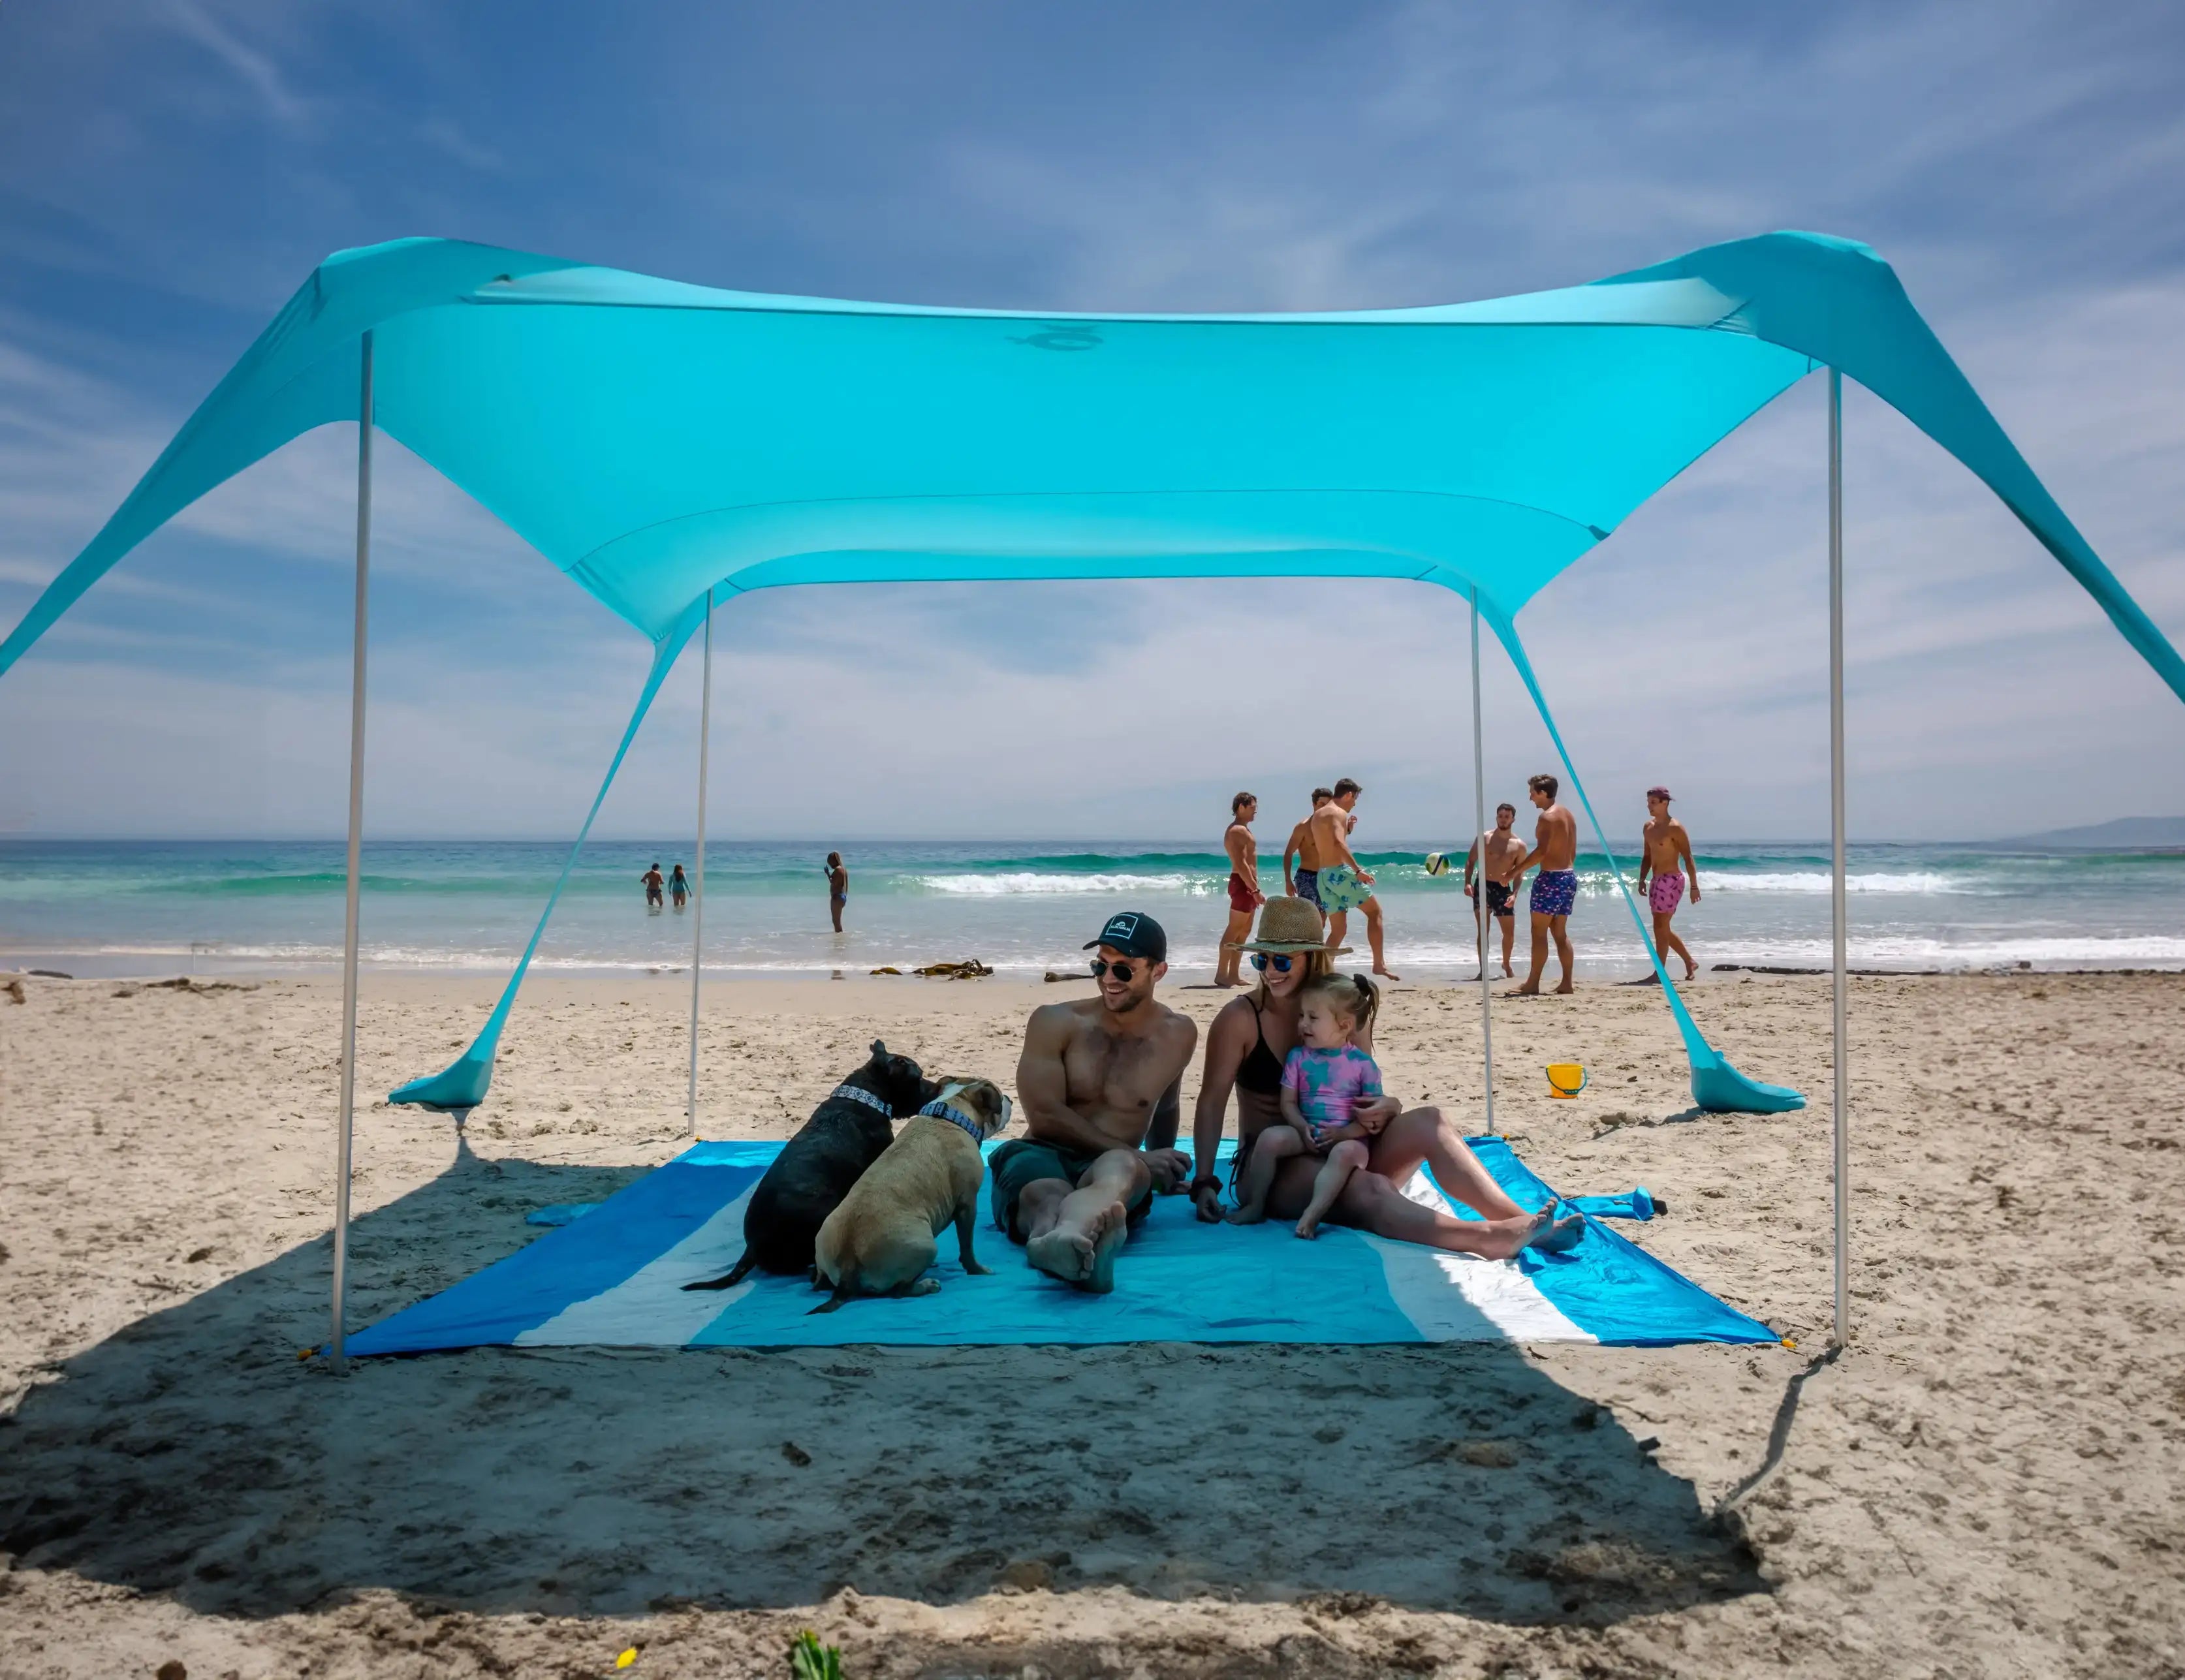 Sun Ninja Beach Canopy 